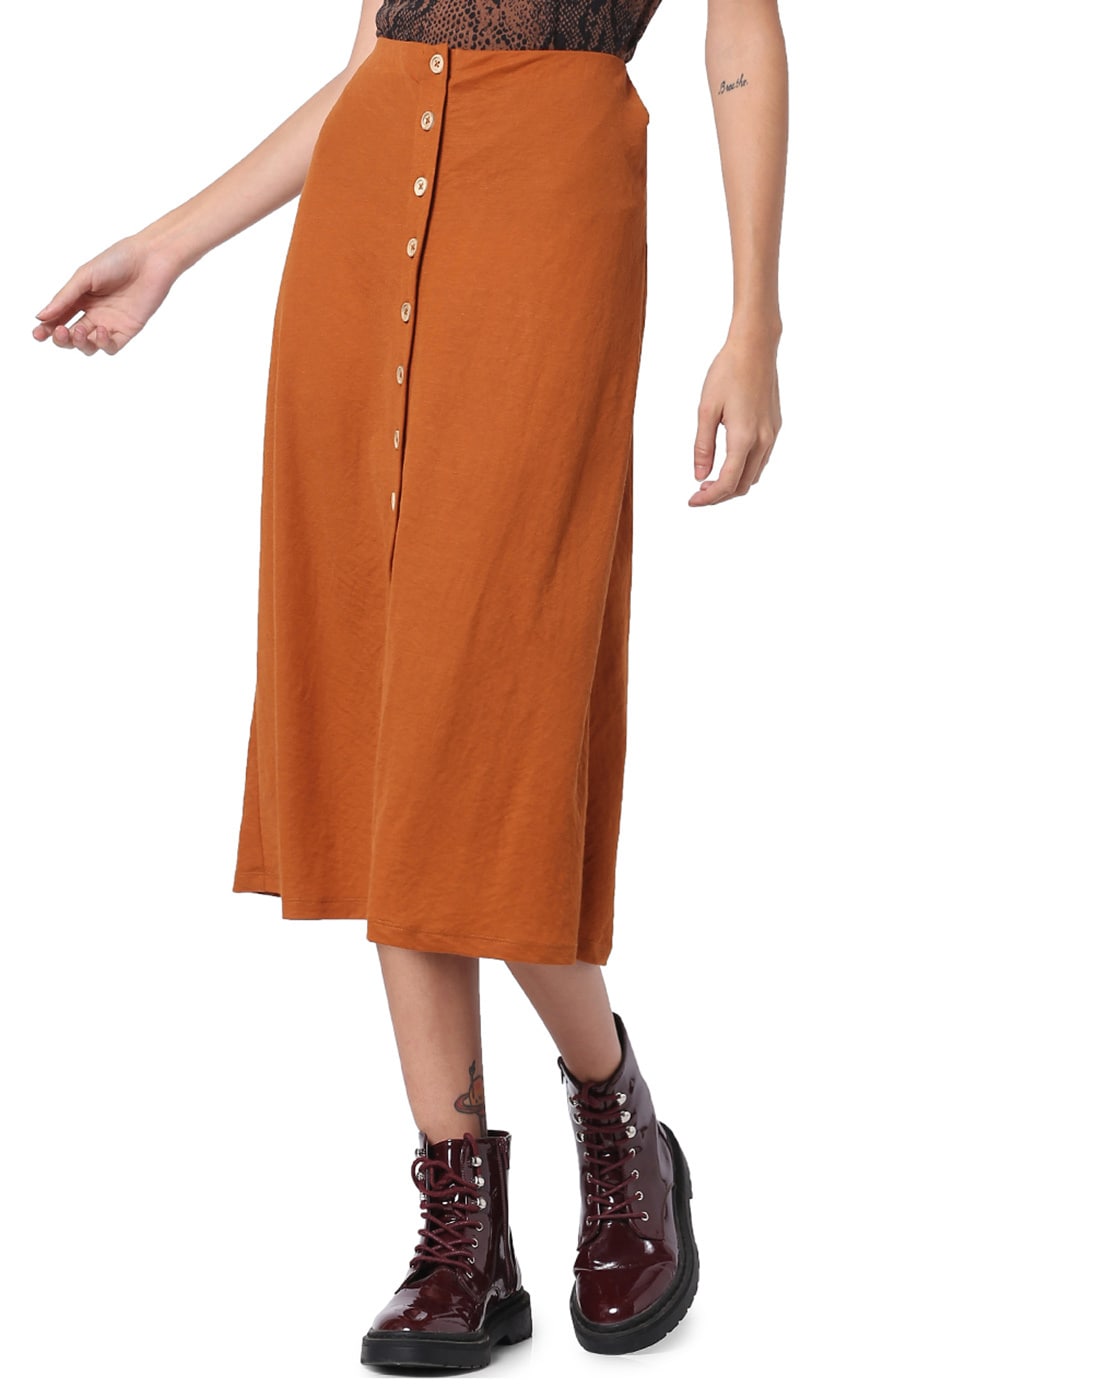 brown skirt online